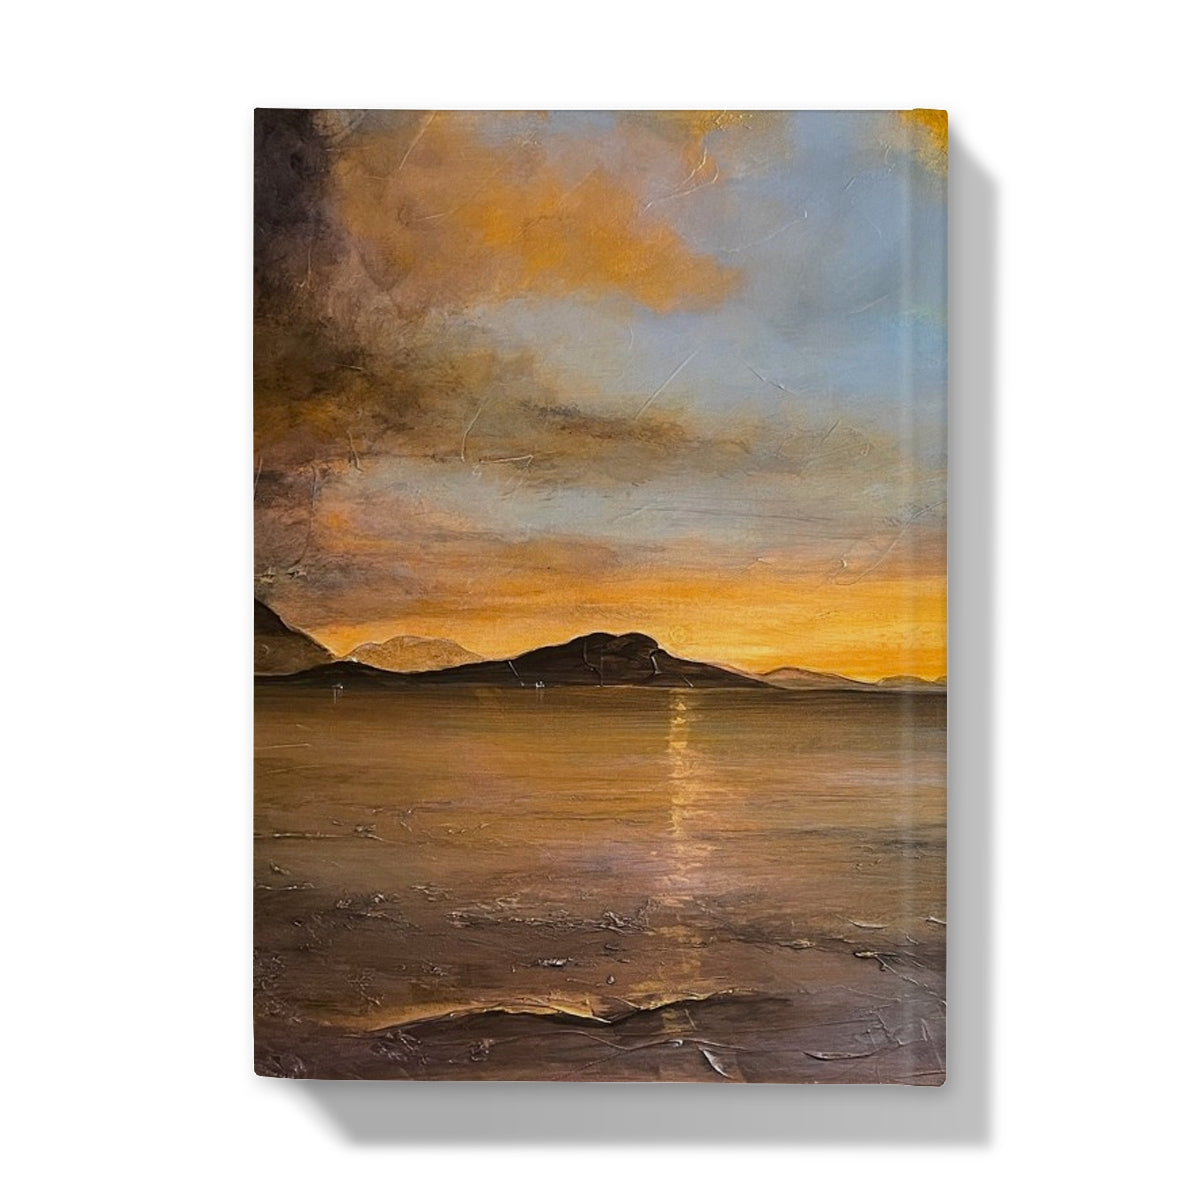 Loch Linnhe Sunset Art Gifts Hardback Journal-Journals & Notebooks-Scottish Lochs & Mountains Art Gallery-Paintings, Prints, Homeware, Art Gifts From Scotland By Scottish Artist Kevin Hunter